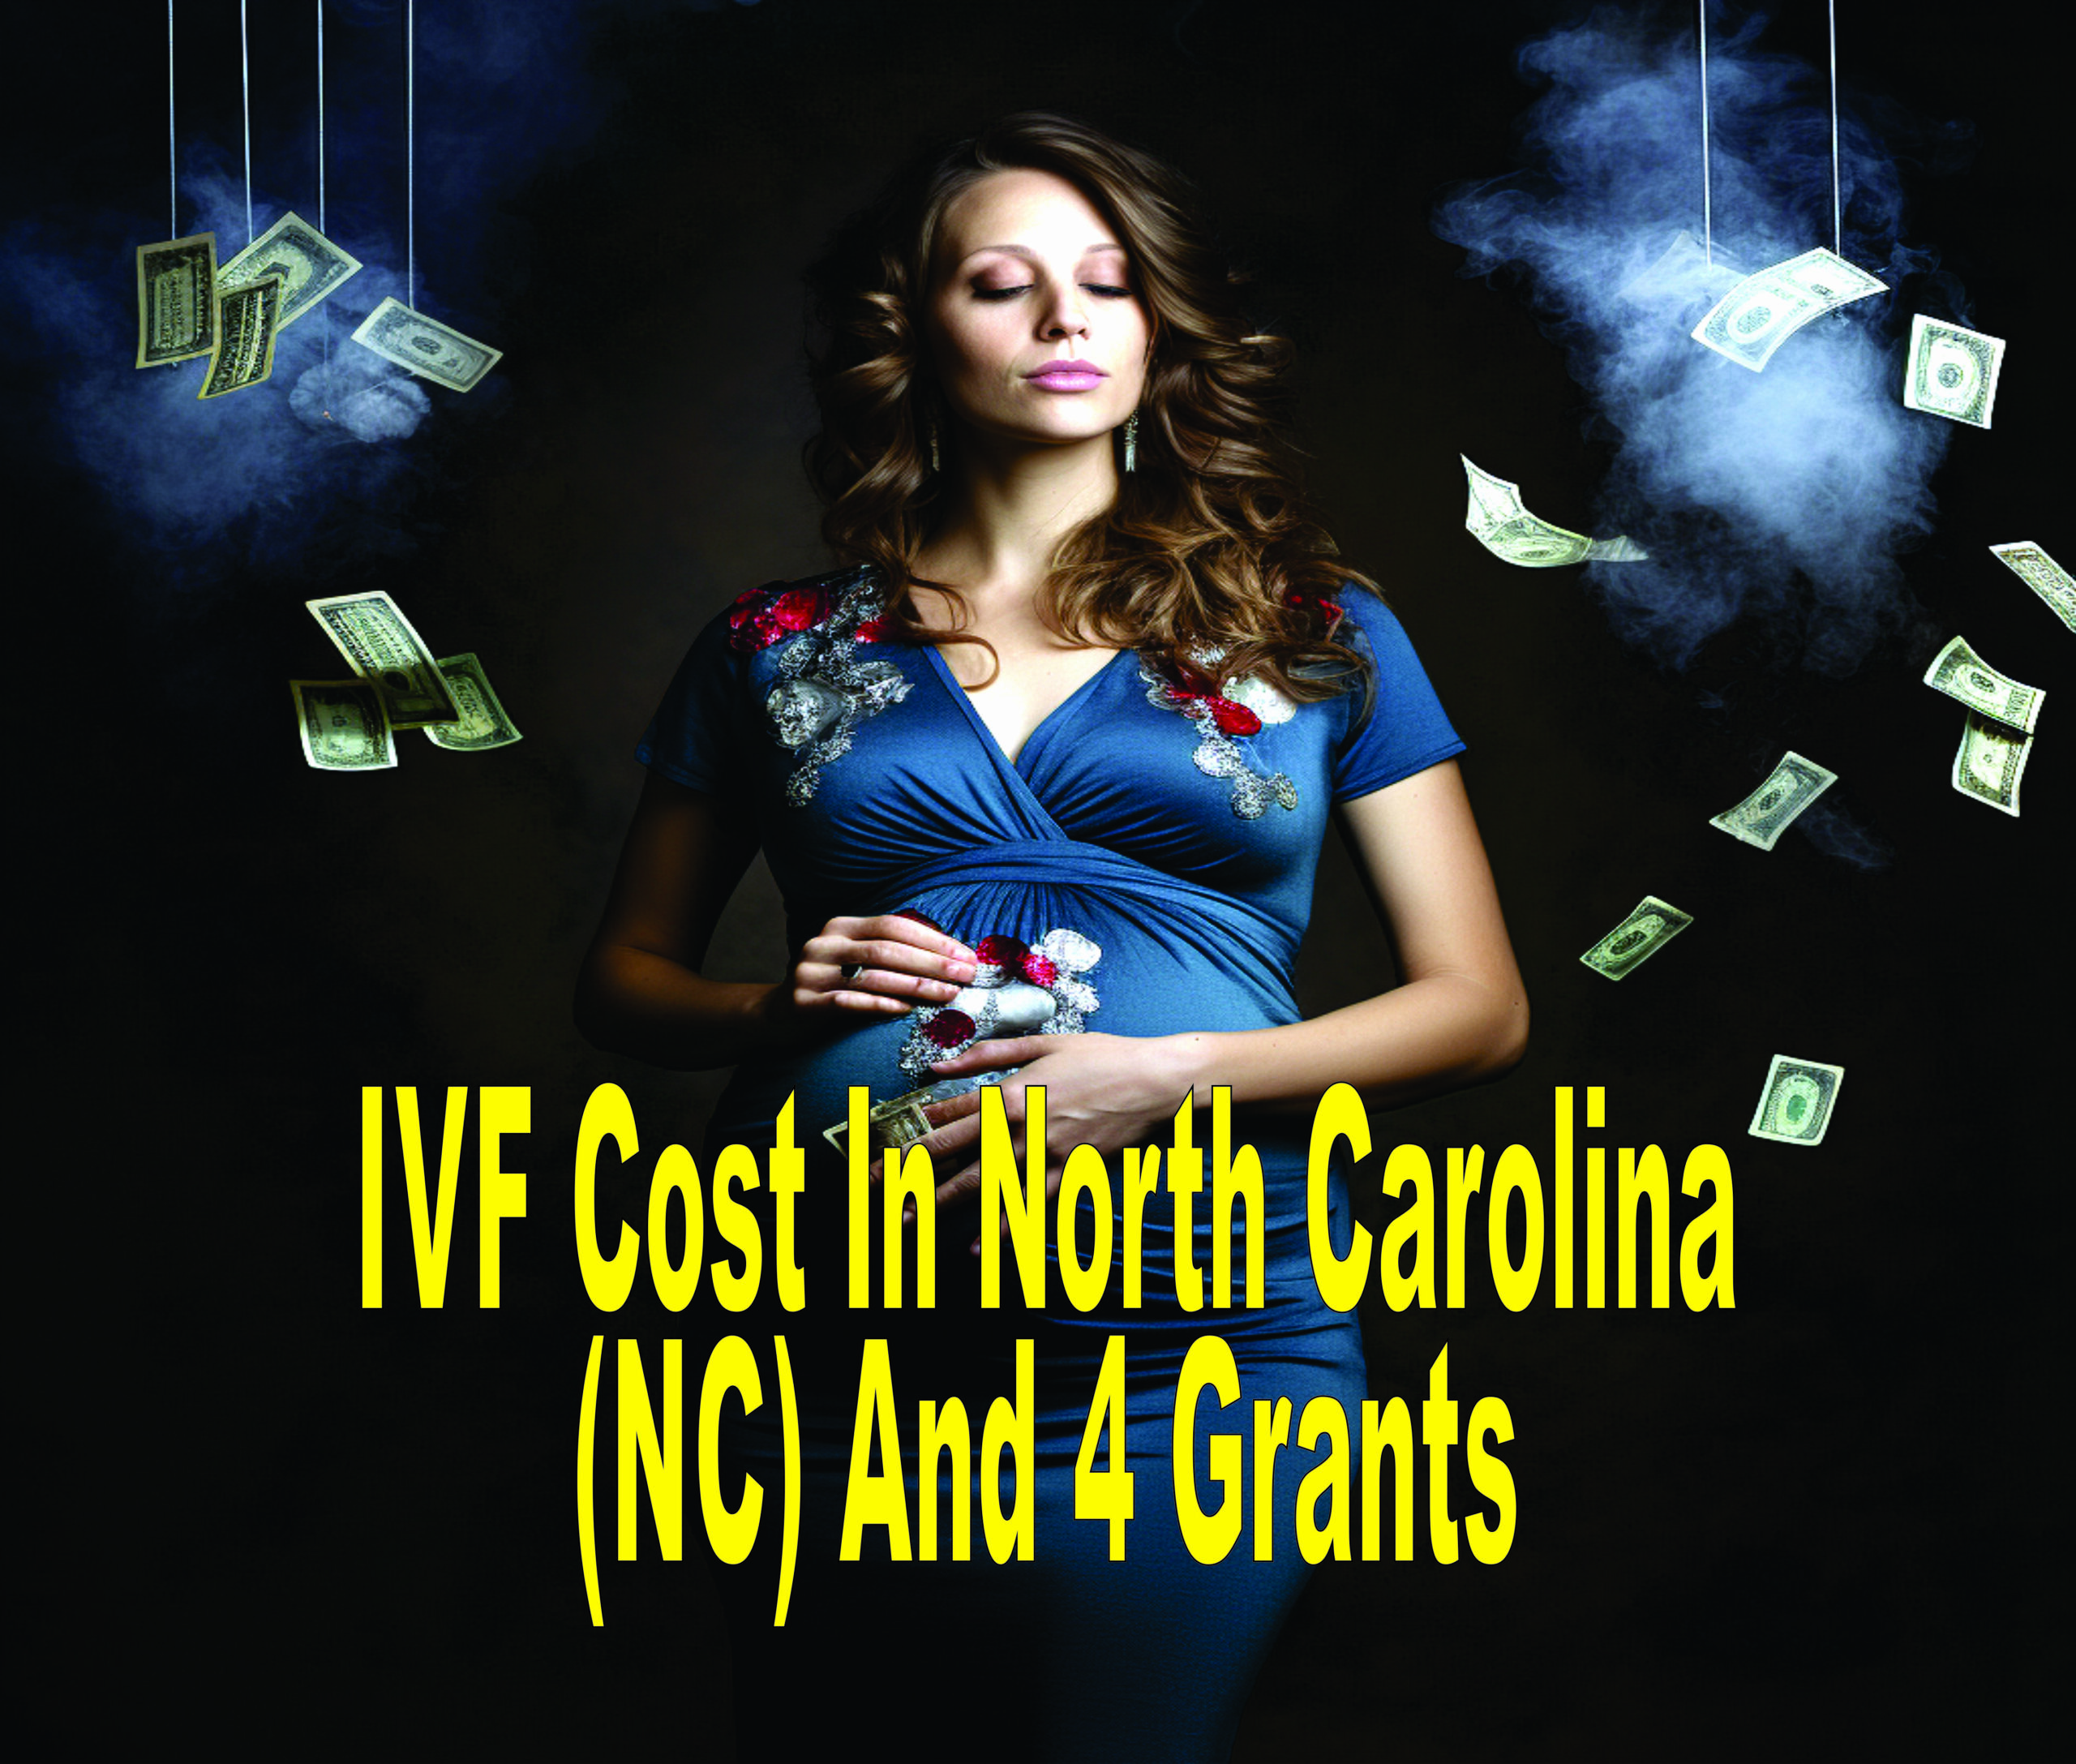 Ivf Cost In North Carolina (nc) And 4 Grants